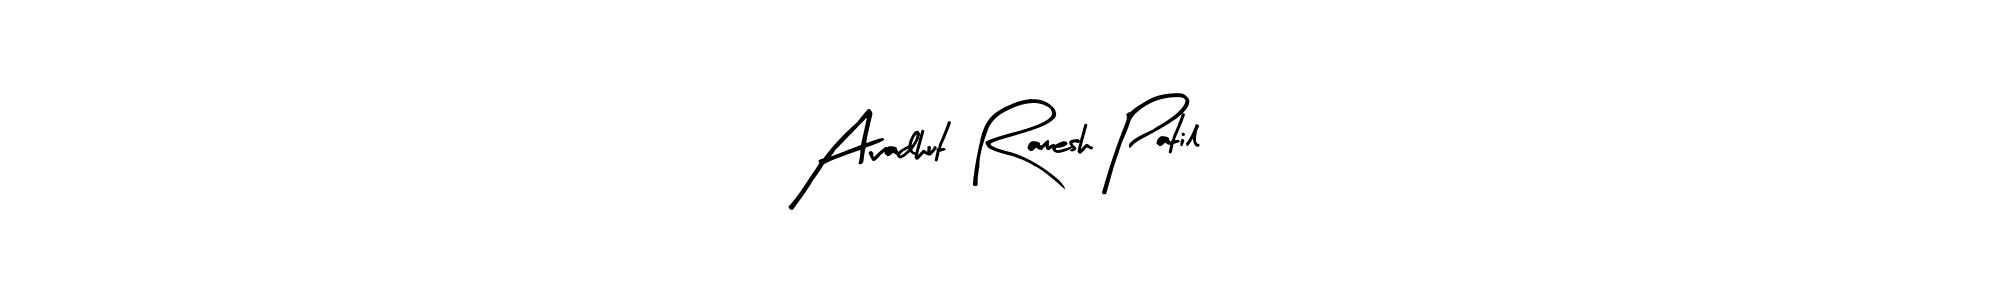 How to Draw Avadhut Ramesh Patil signature style? Arty Signature is a latest design signature styles for name Avadhut Ramesh Patil. Avadhut Ramesh Patil signature style 8 images and pictures png